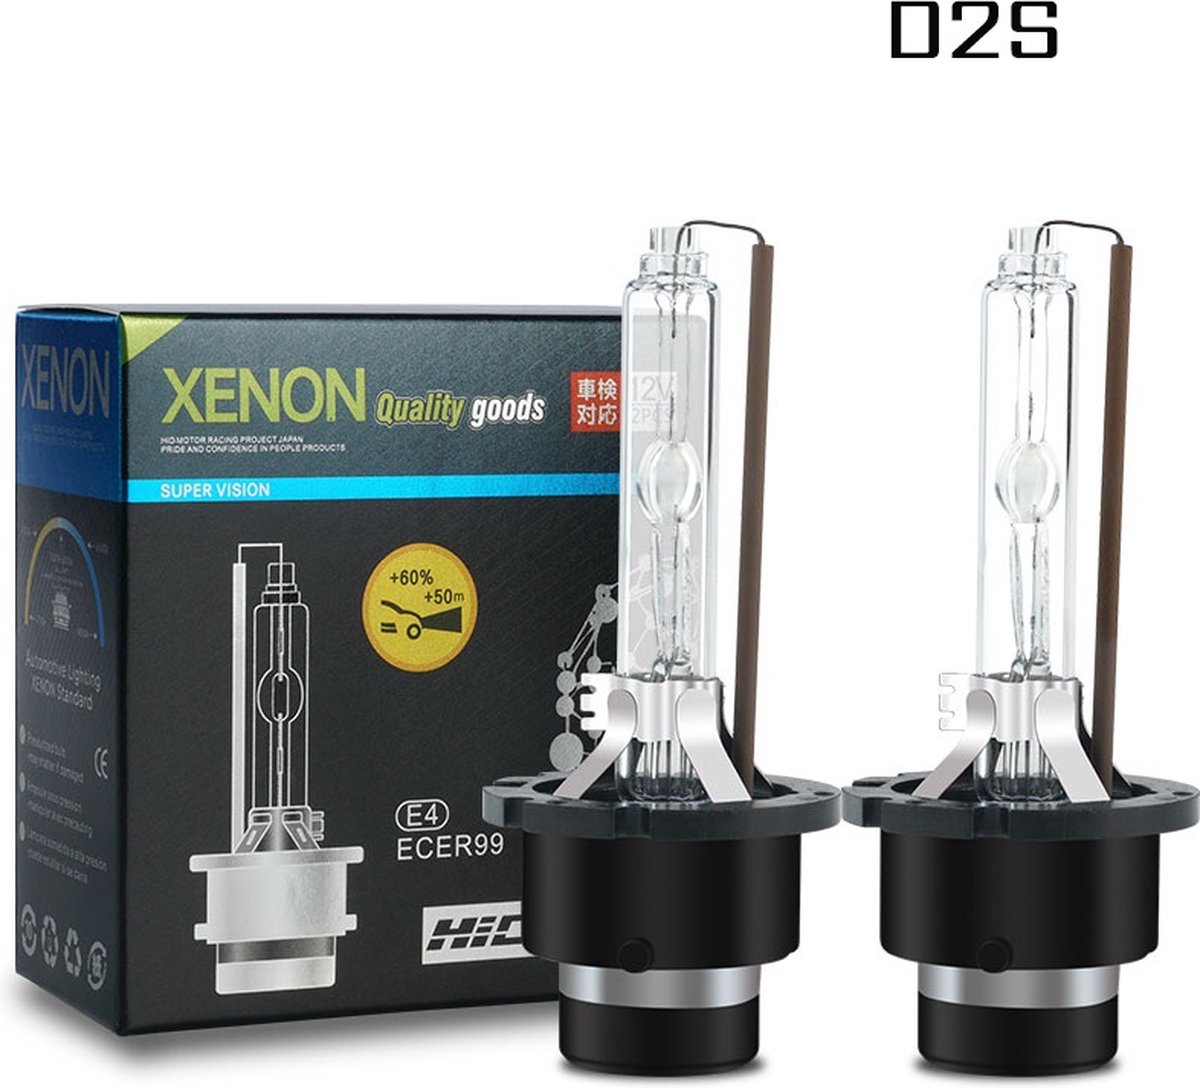 TLVX D2S 35W 12V Origineel Xenon Lampen 8000K (2 stuks) / Wit - Blauw licht / HID lampen / 35W / Xenon bulbs / Dimlicht / Grootlicht / Hoge Lichtopbrengst / Xenon Koplampen / Auto Lamp / CANBUS / Autolampen / Origineel D2S Xenon (2 stuks)